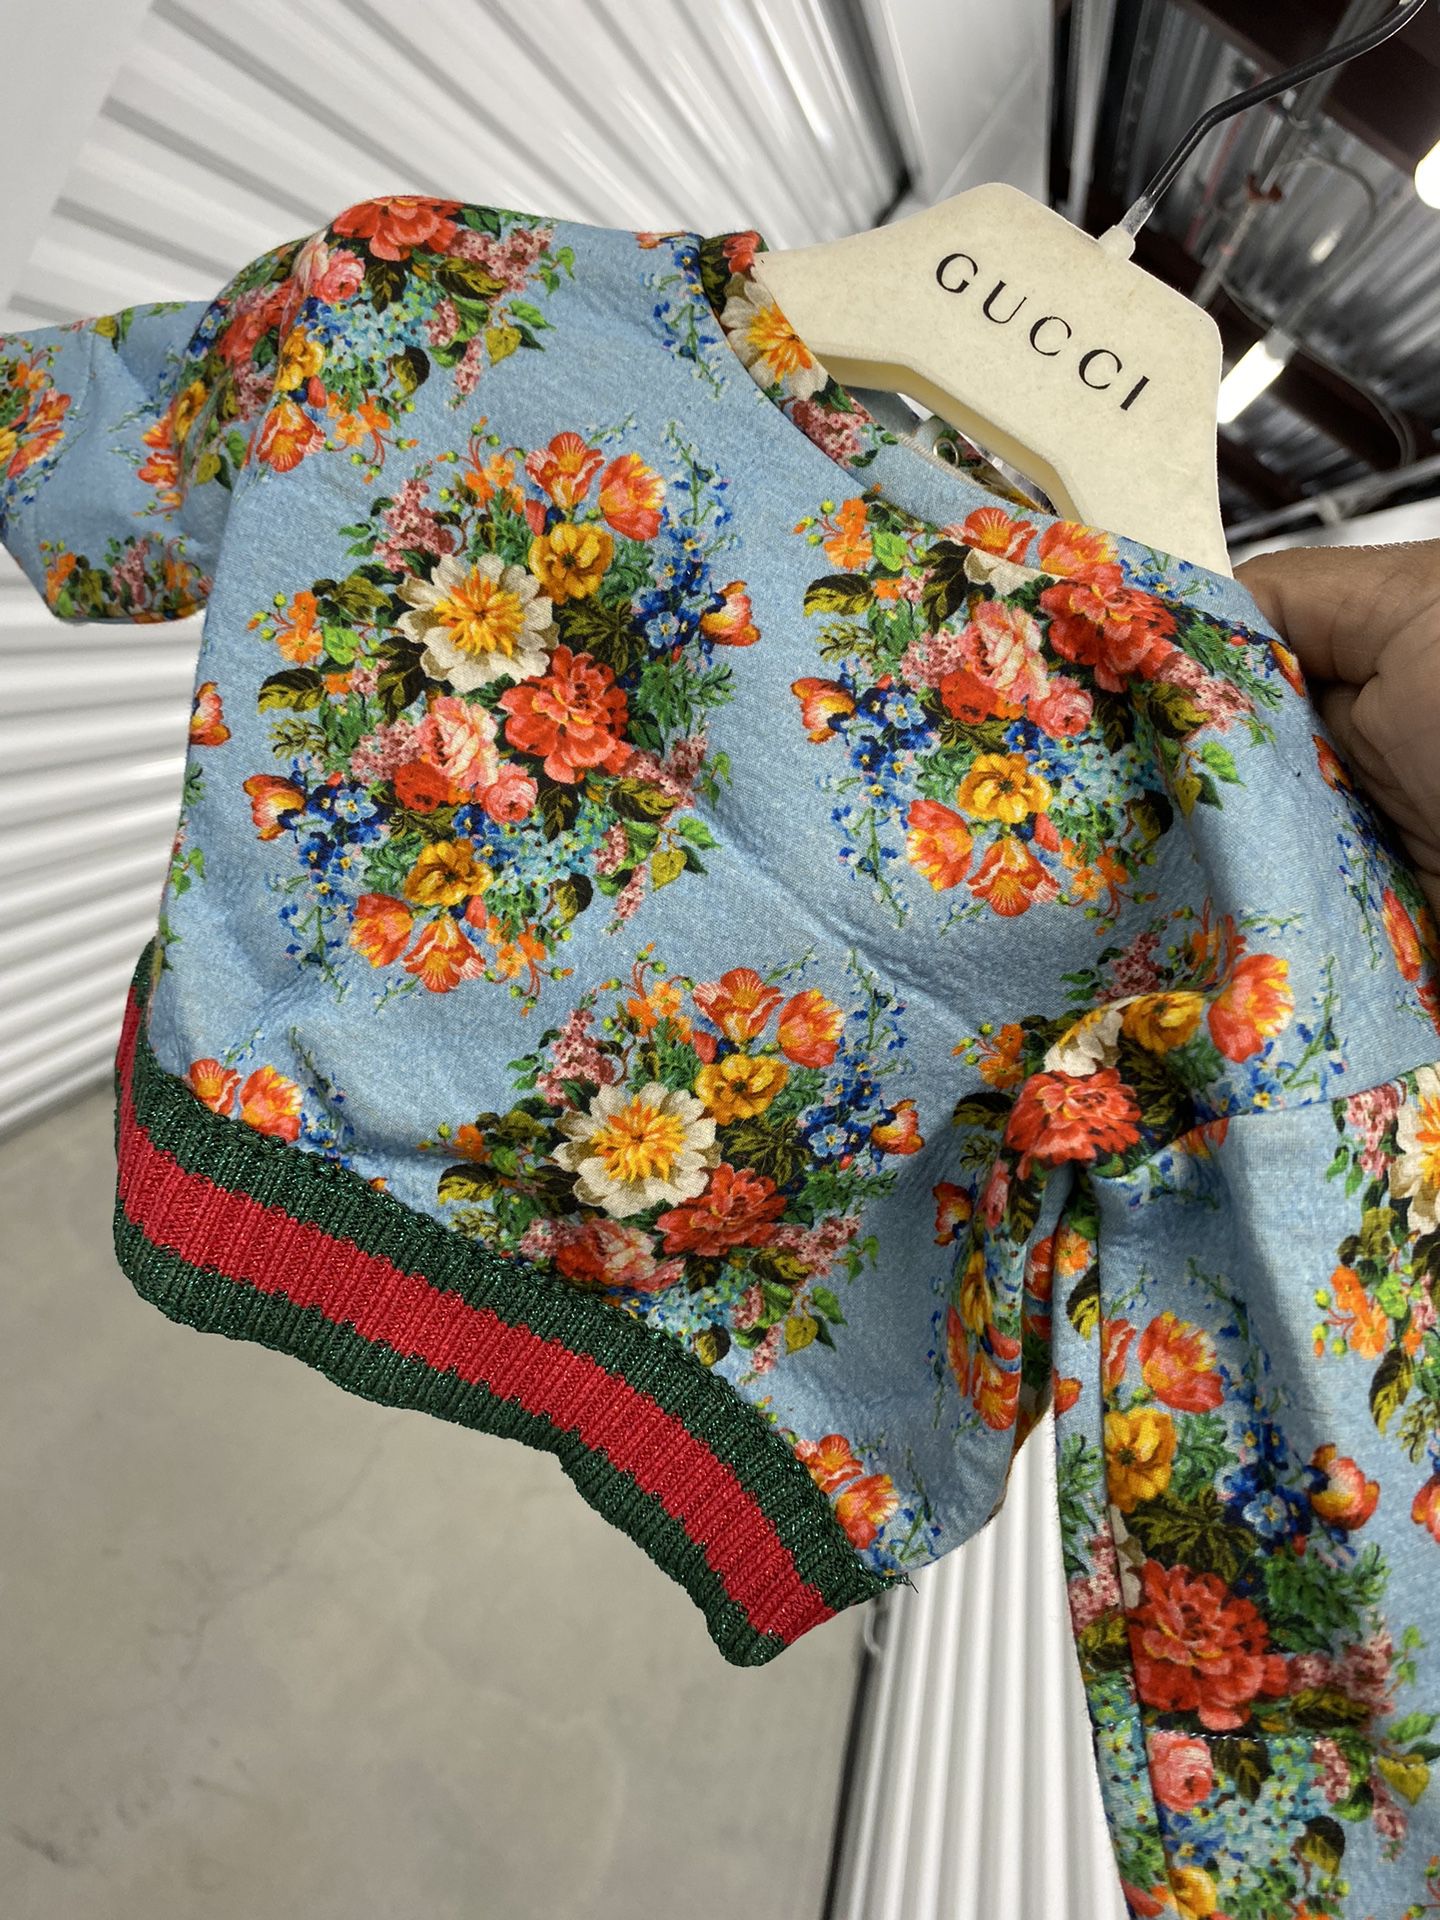 Baby Gucci Shirt